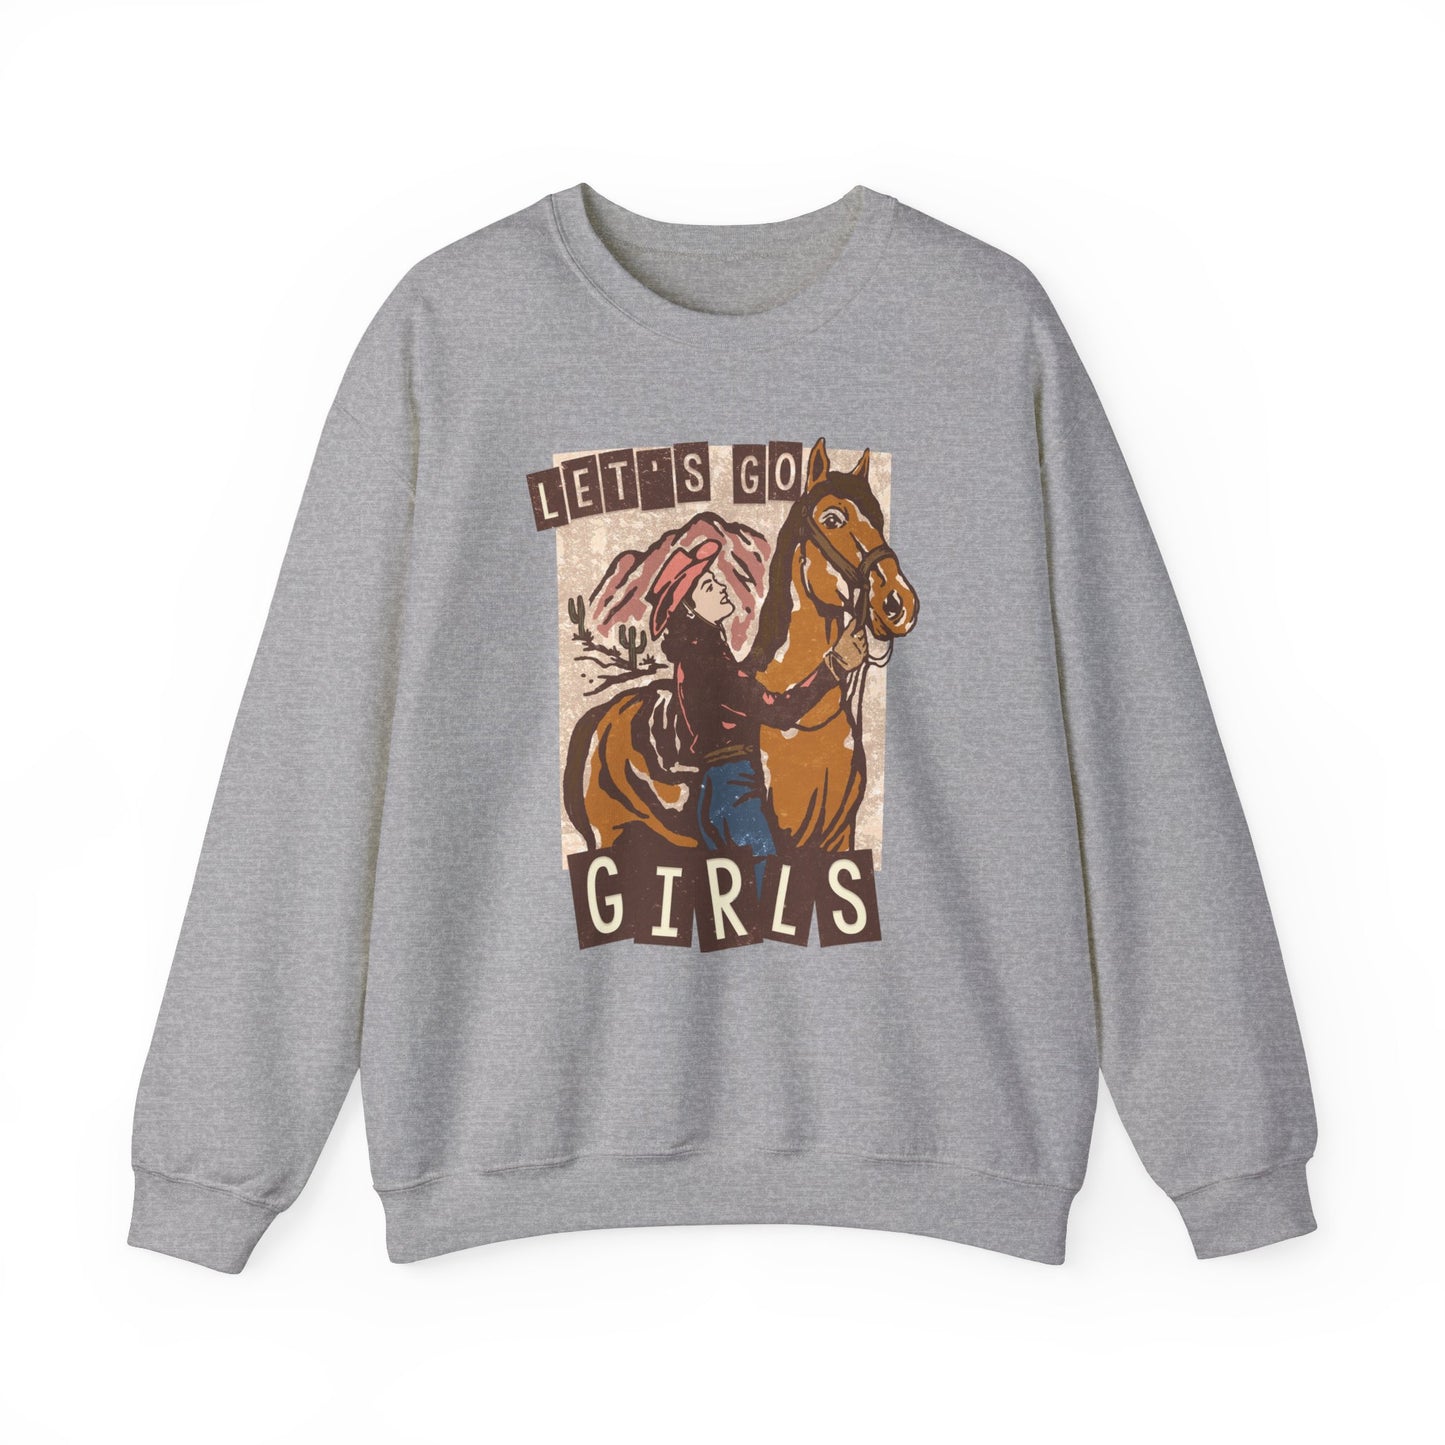 Lets Go Girls, Western Sweatshirt